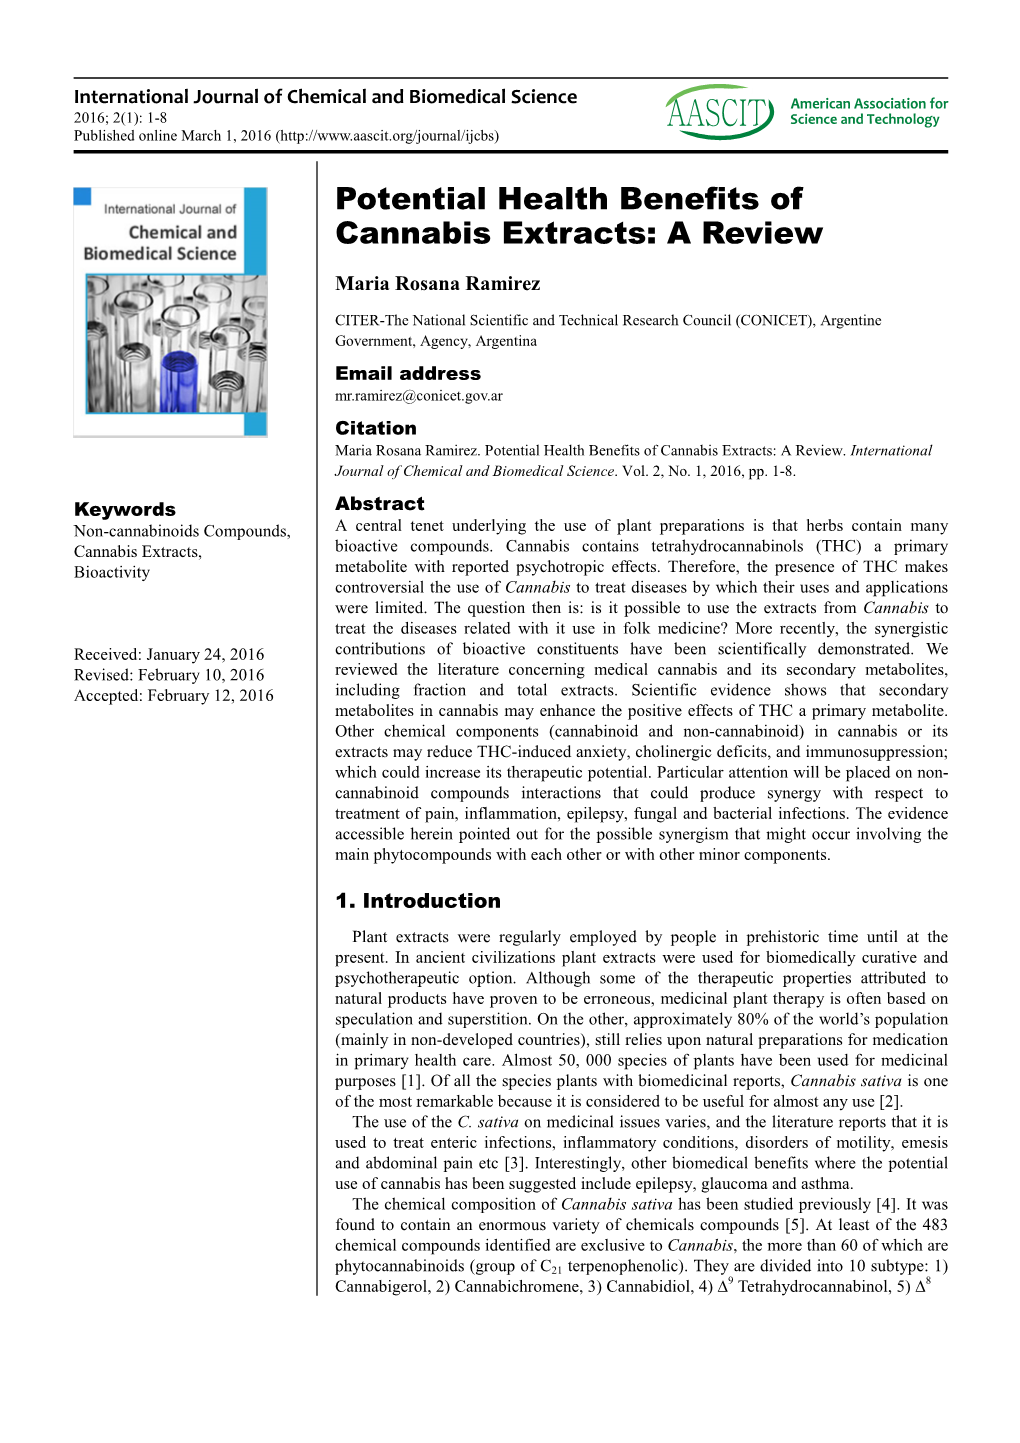 Potential Health Benefits of Cannabis Extracts: a Review Maria Rosana Ramirez